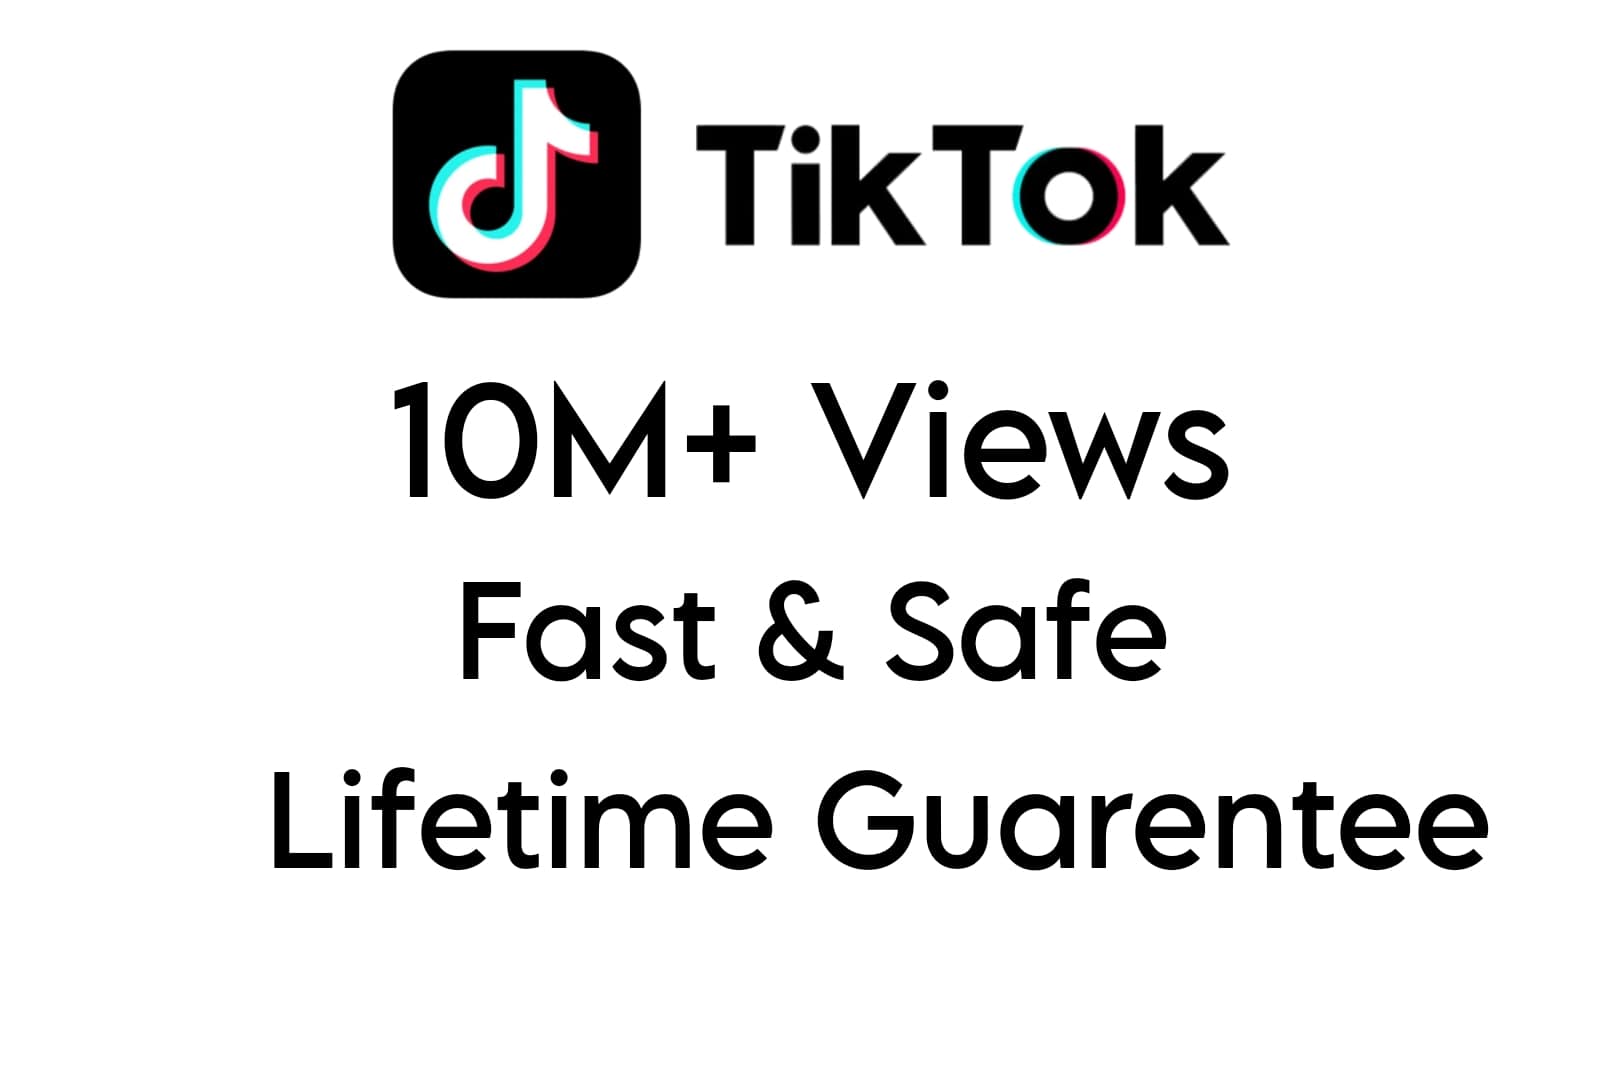 Tiktok 10M+ Views Fast & Safe Lifetime Guarentee.